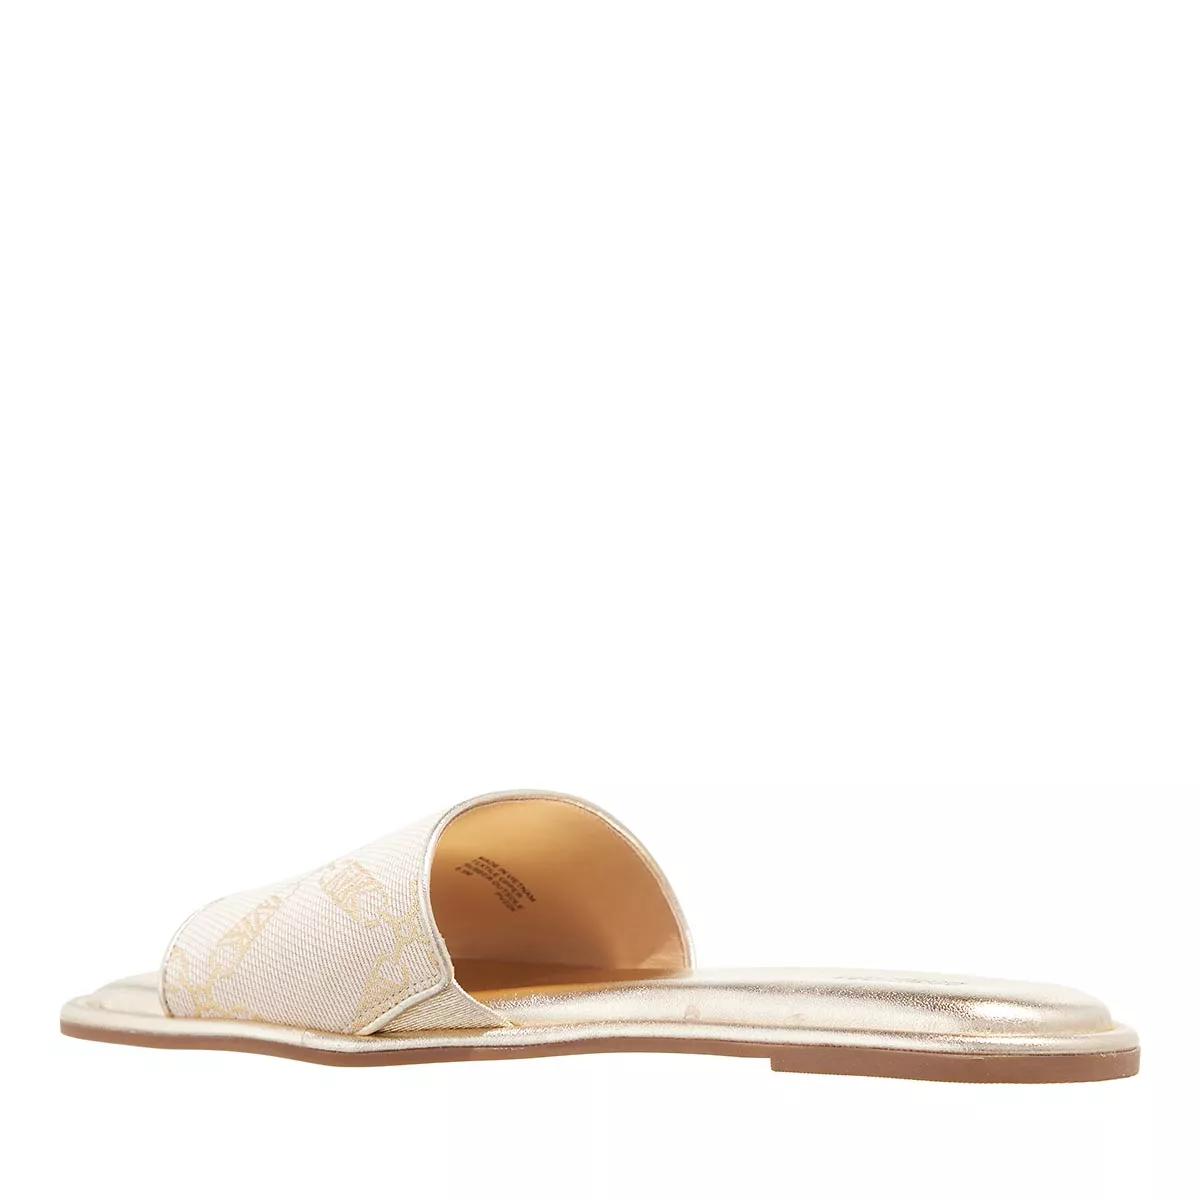 Michael Kors Hayworth women's sandal Natural-Gold